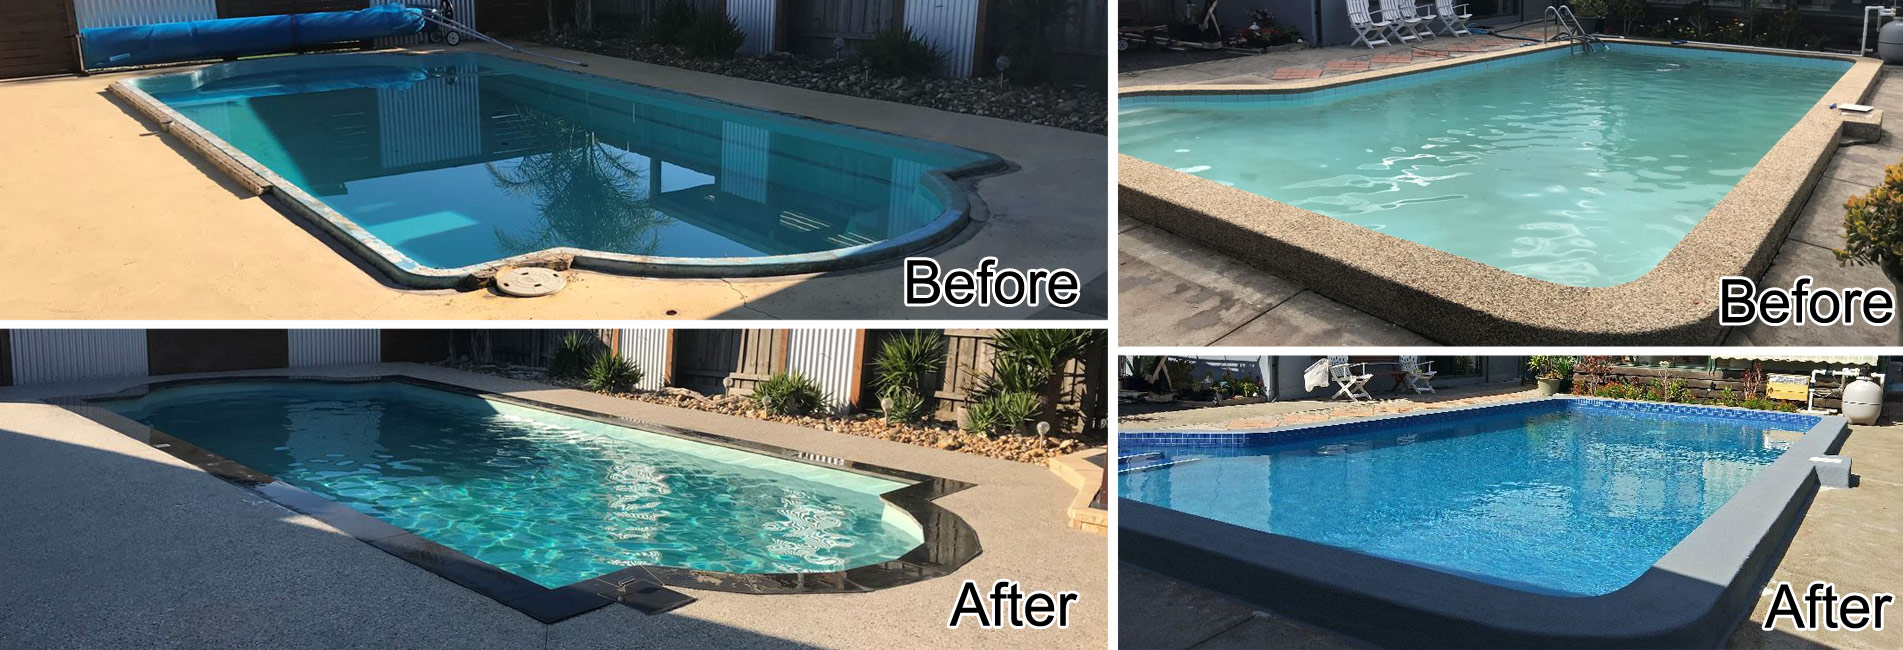 Pool Renovations Seaford, Pool Repairs Melbourne, Pool Paving Cranbourne, Pool Services Narre Warren